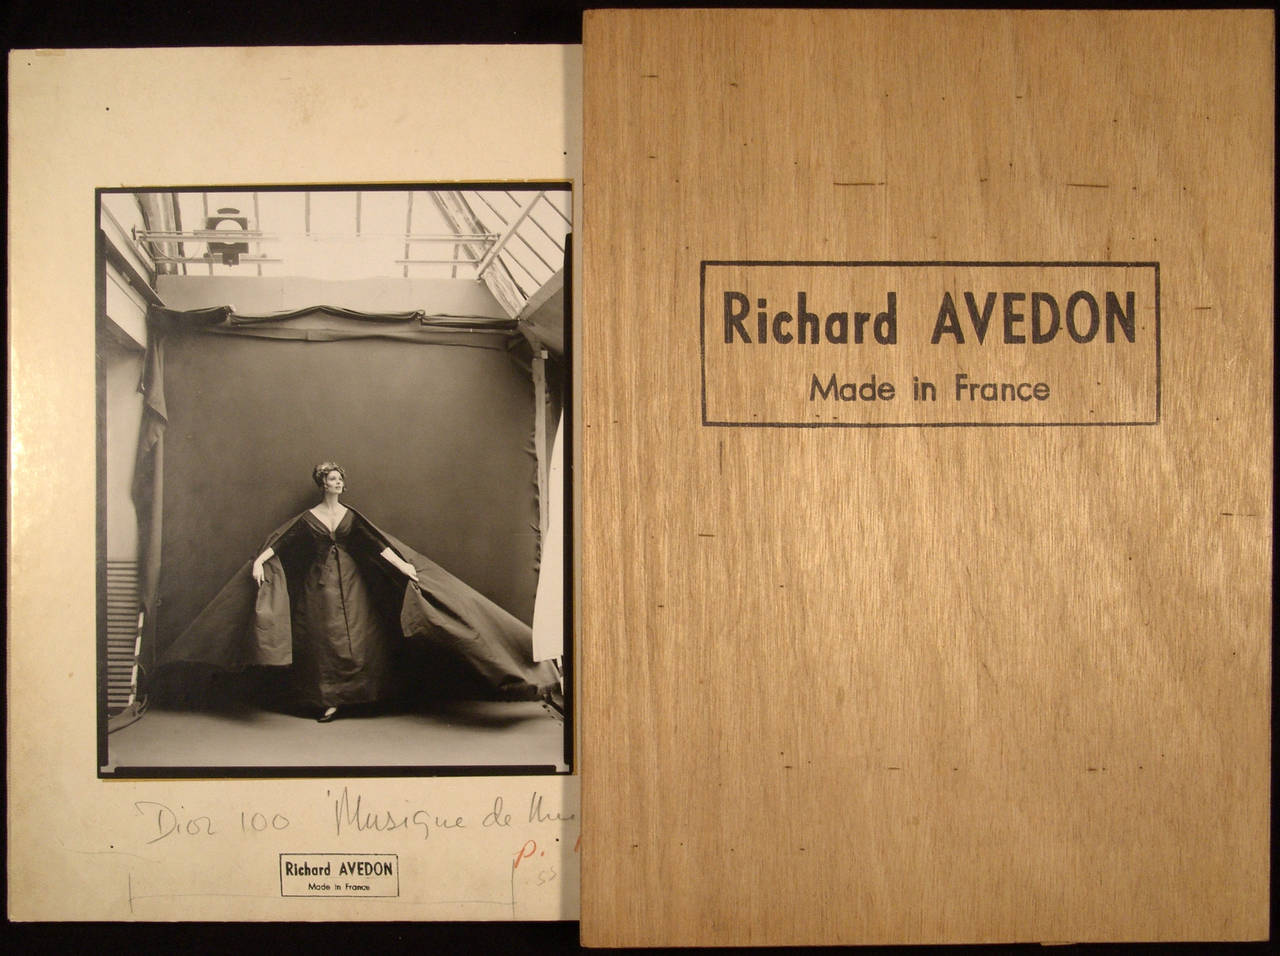 Richard Avedon: Made in France  Silver gelatin print 1